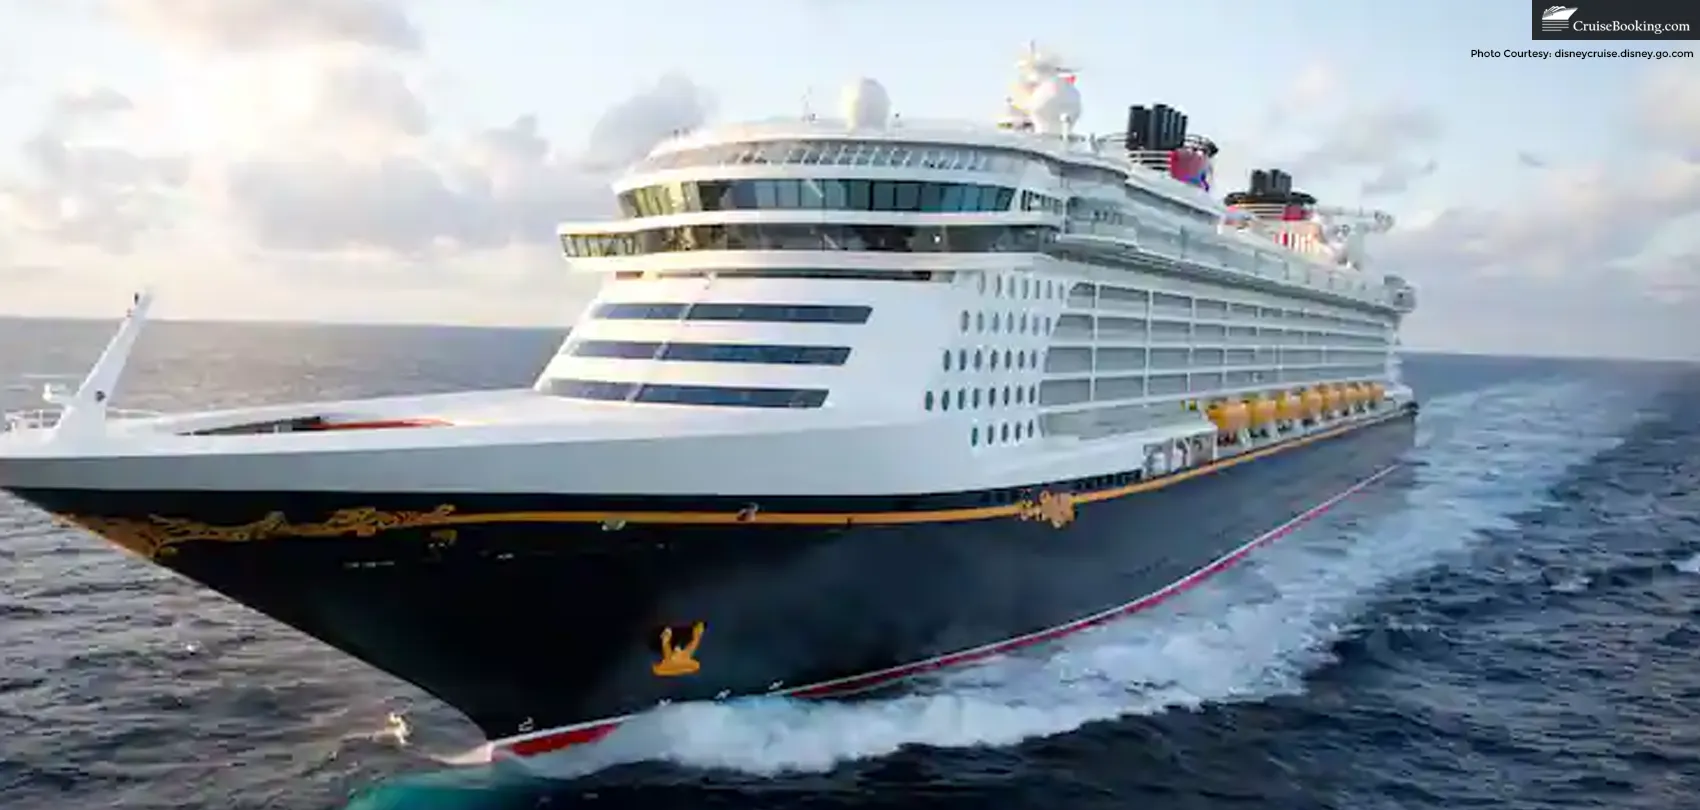 The Disney Dream crosses the Atlantic before it debuts in Europe